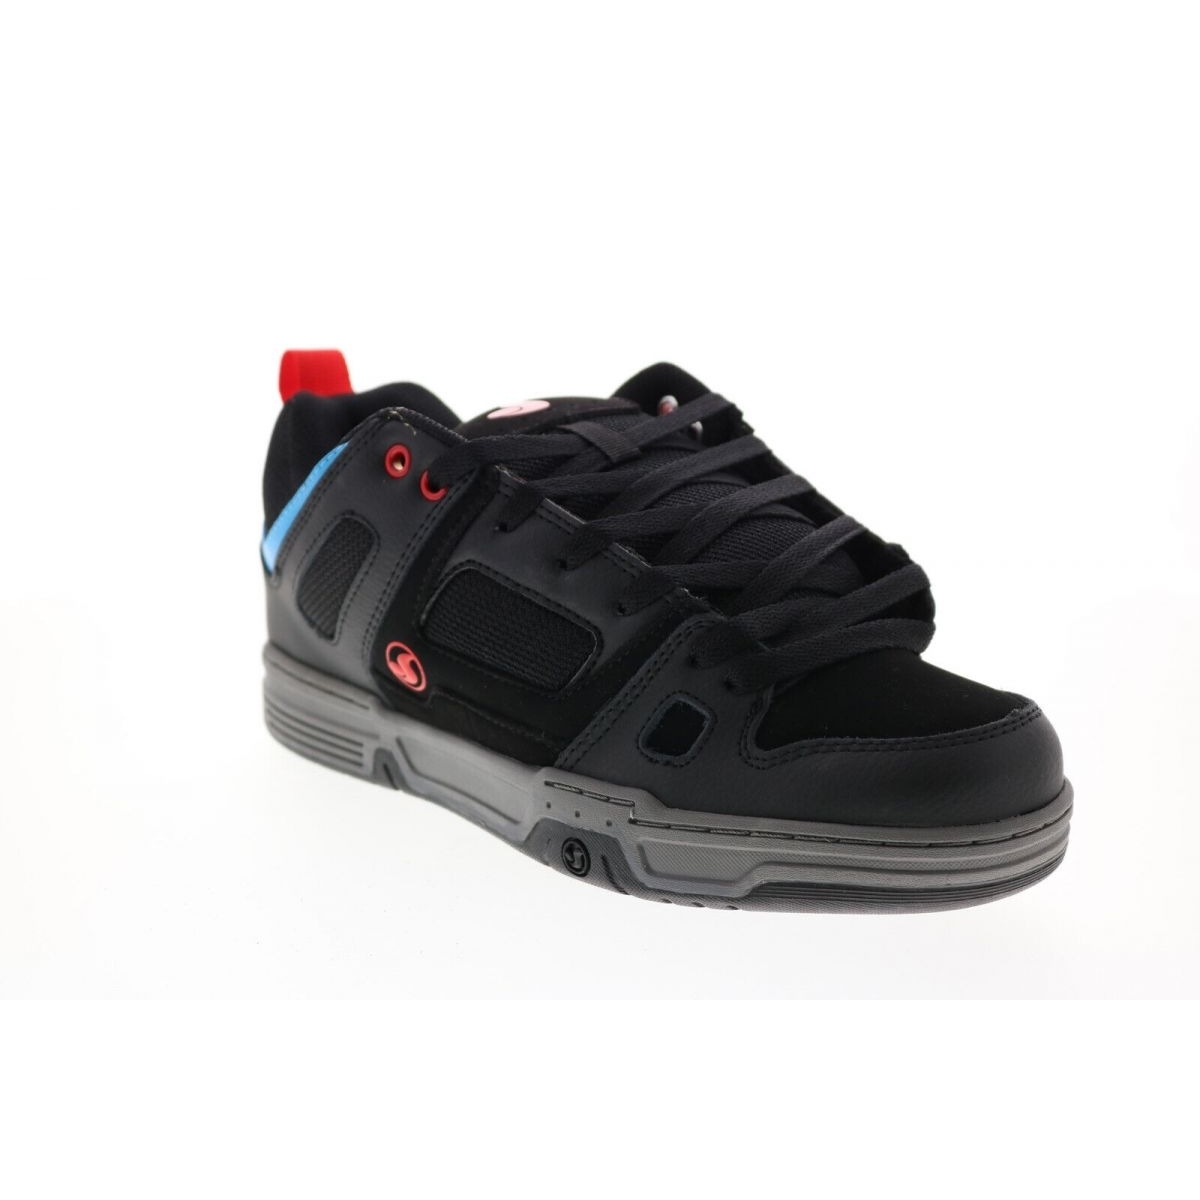 DVS Men's Gambol Skate Shoe 0 BLACK FIERY RED BLUE NUBUCK - BLACK FIERY RED BLUE NUBUCK, 10.5